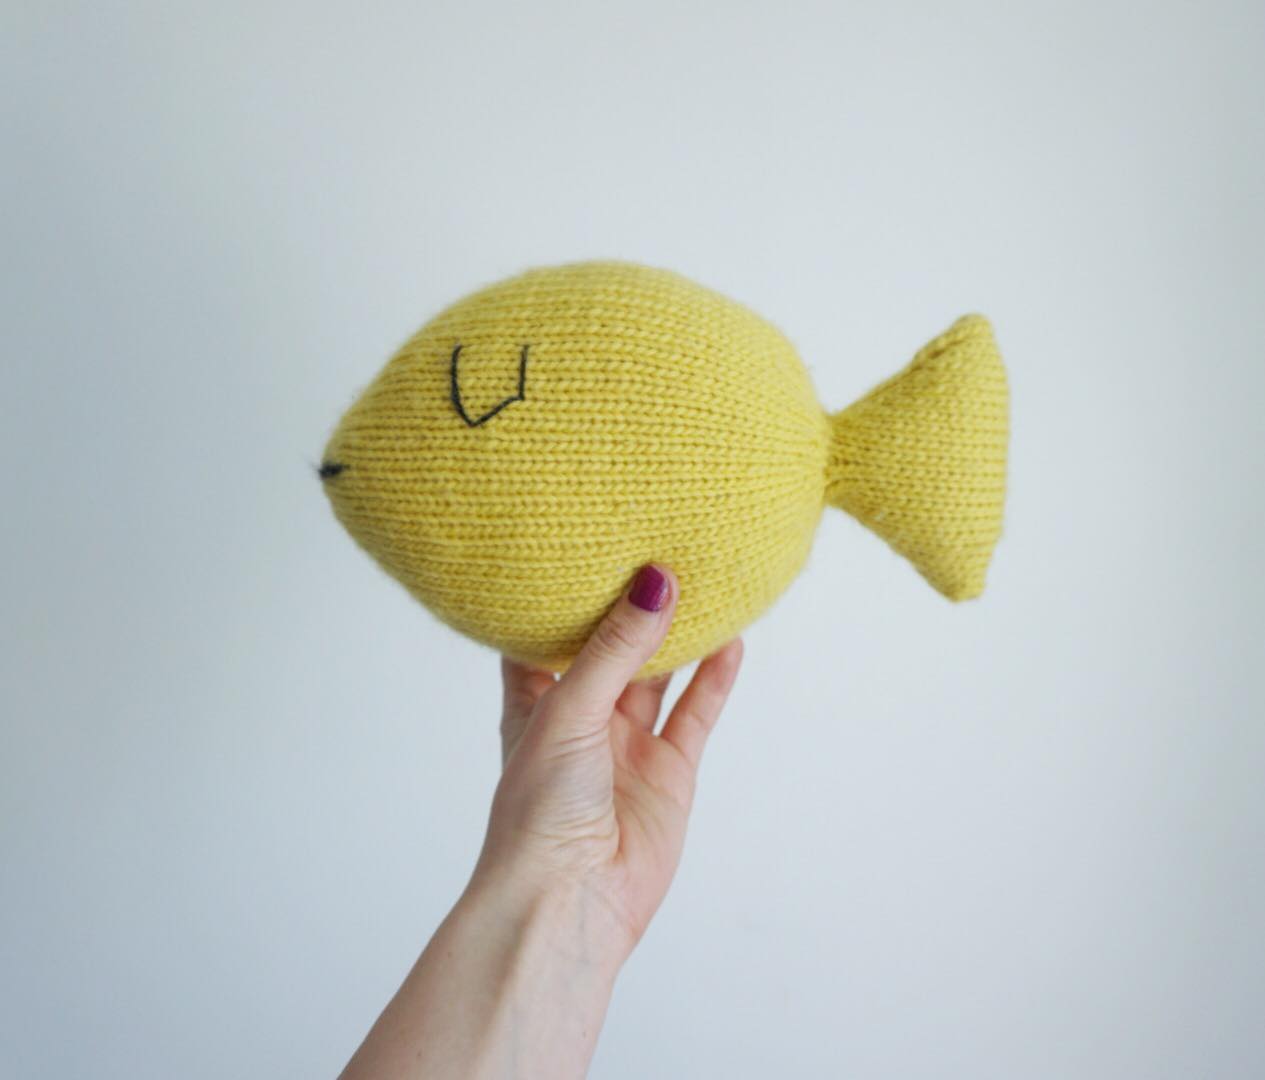  - Fish toy pillow knitting pattern - Fish Pillow - by HipKnitShop - 17/04/2018